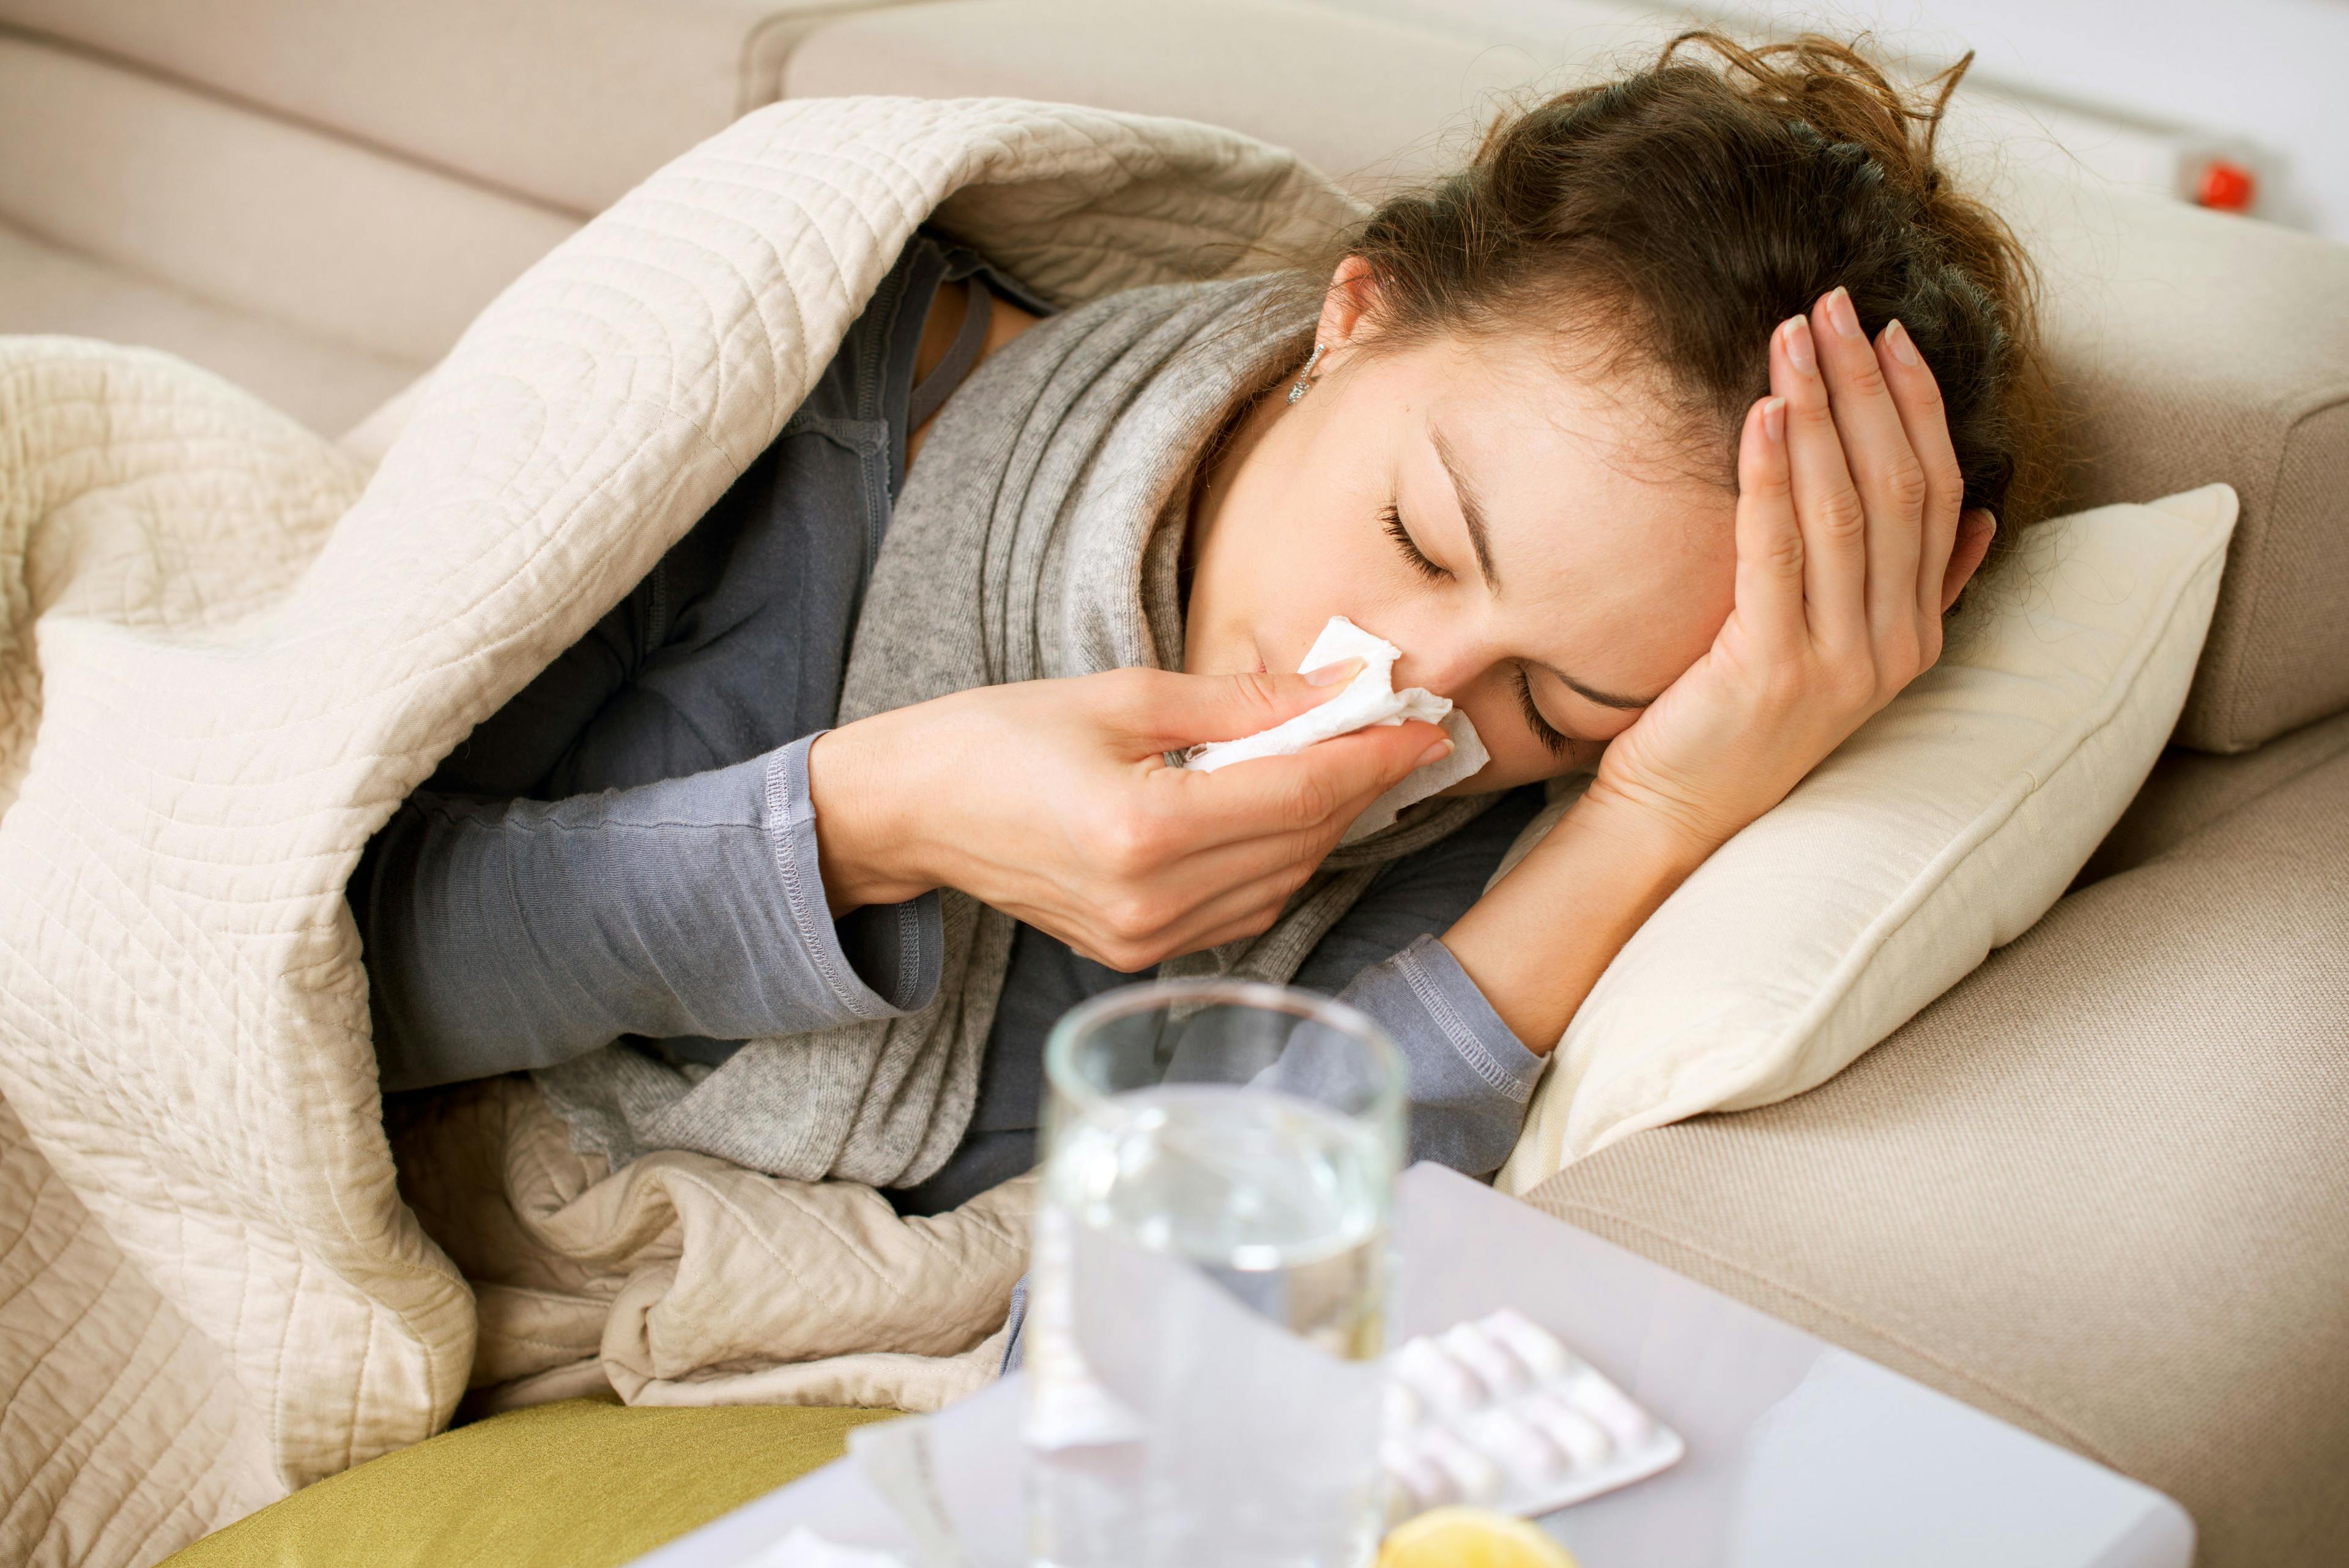 Sick woman with flu | Image credit: Subbotina Anna - stock.adobe.com